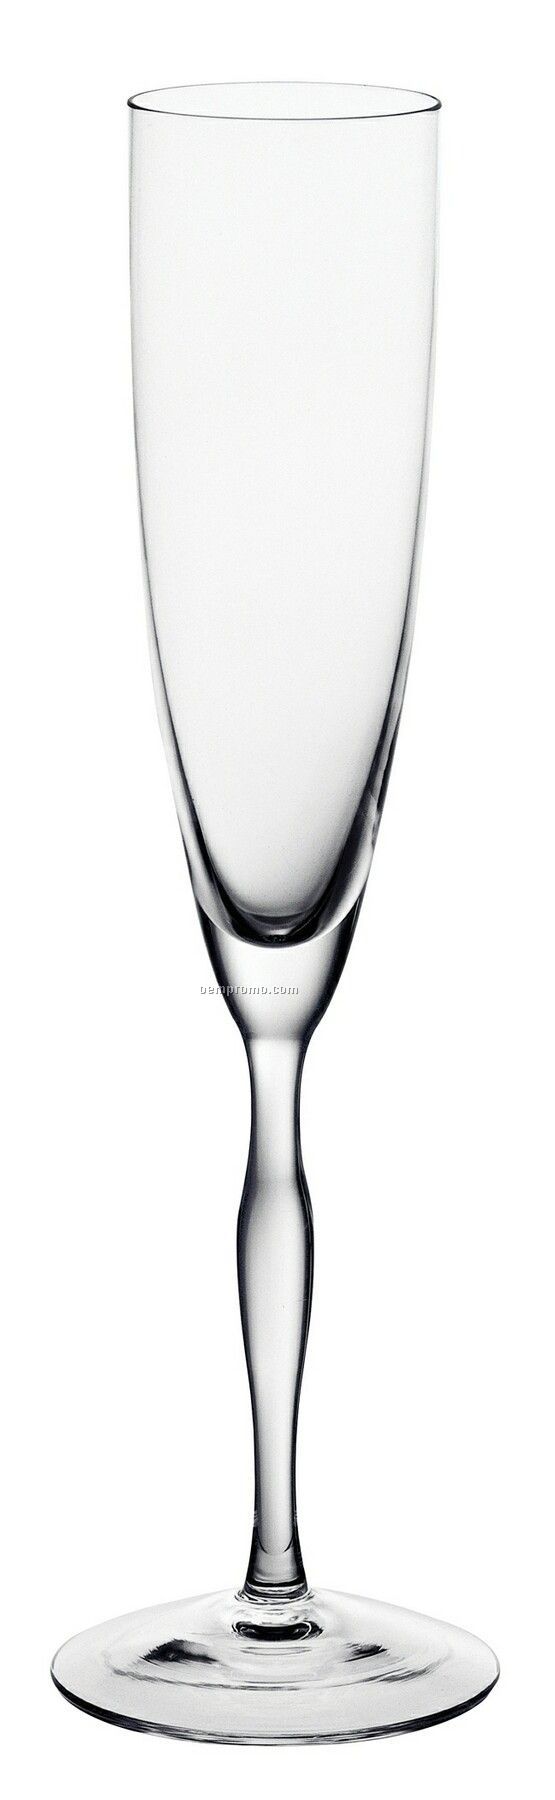 Balans Crystal Champagne Flute Stemware By Jan Johansson